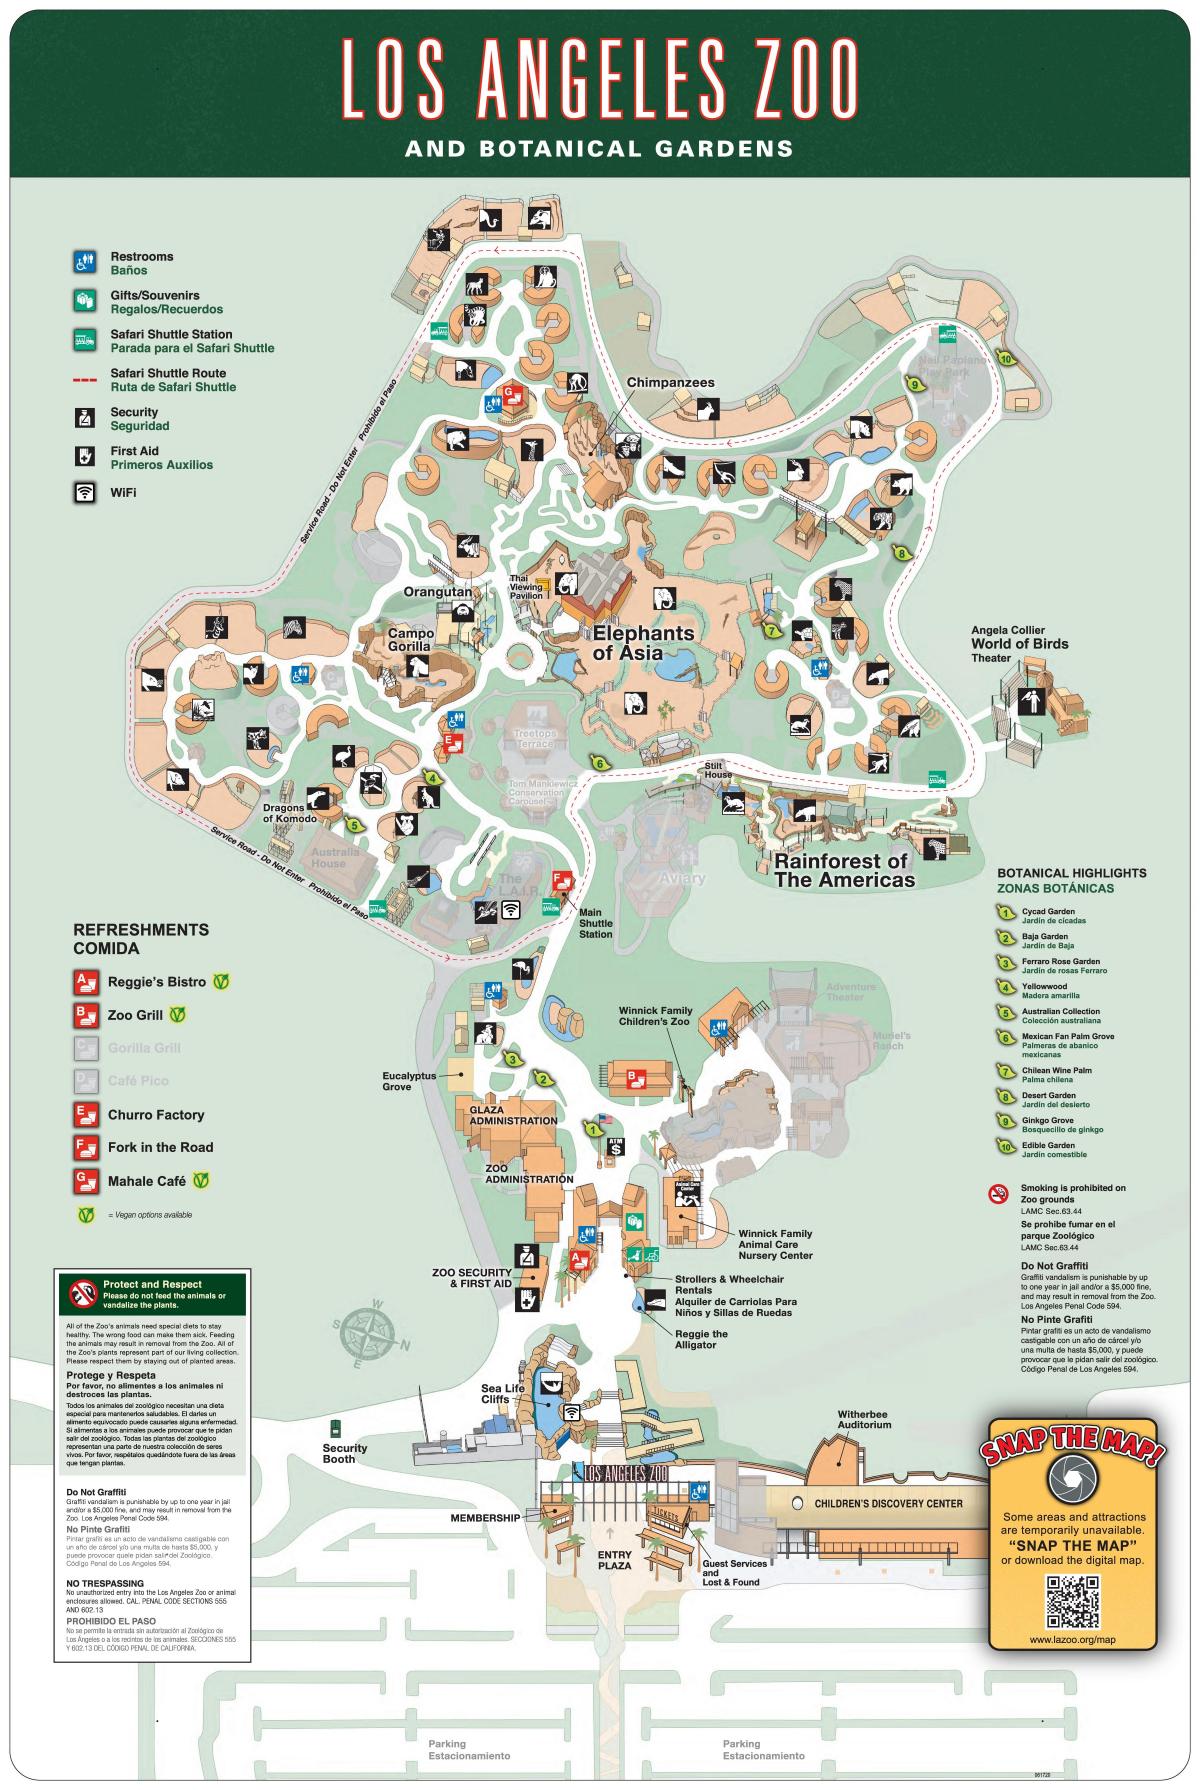 Los Angeles zoo mapě